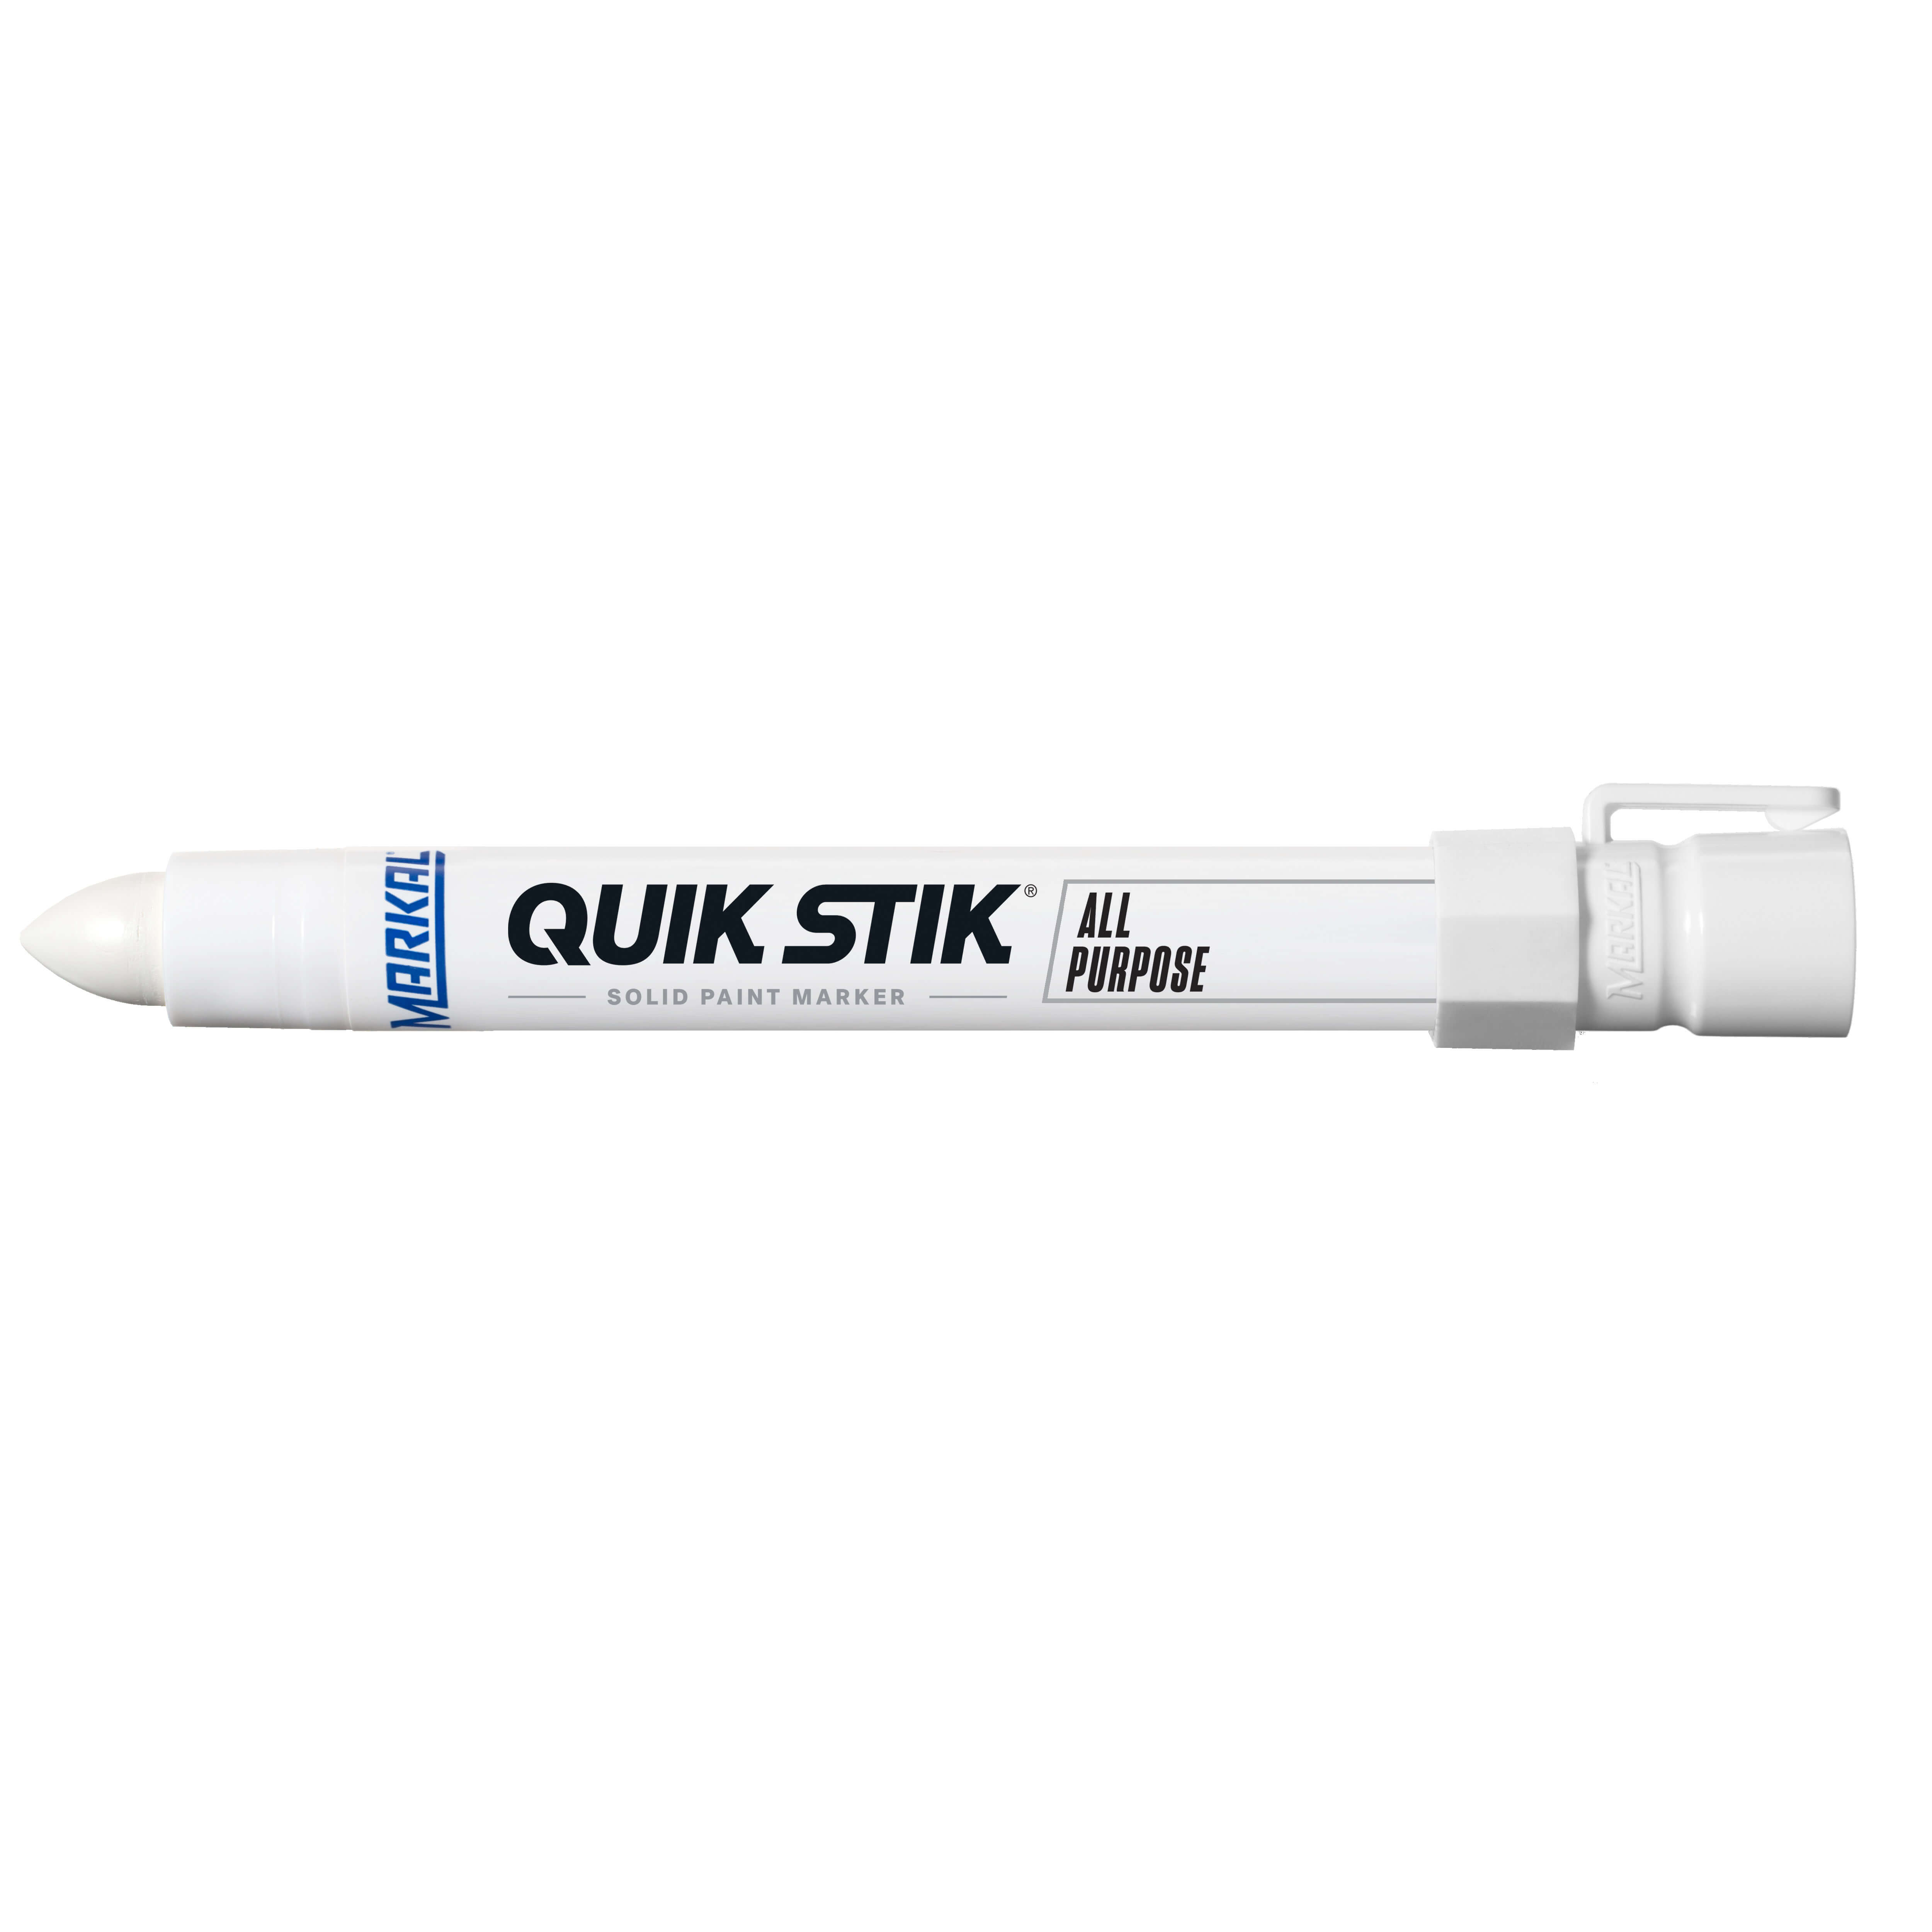 Quik Stik All Purpose – paint marker, white